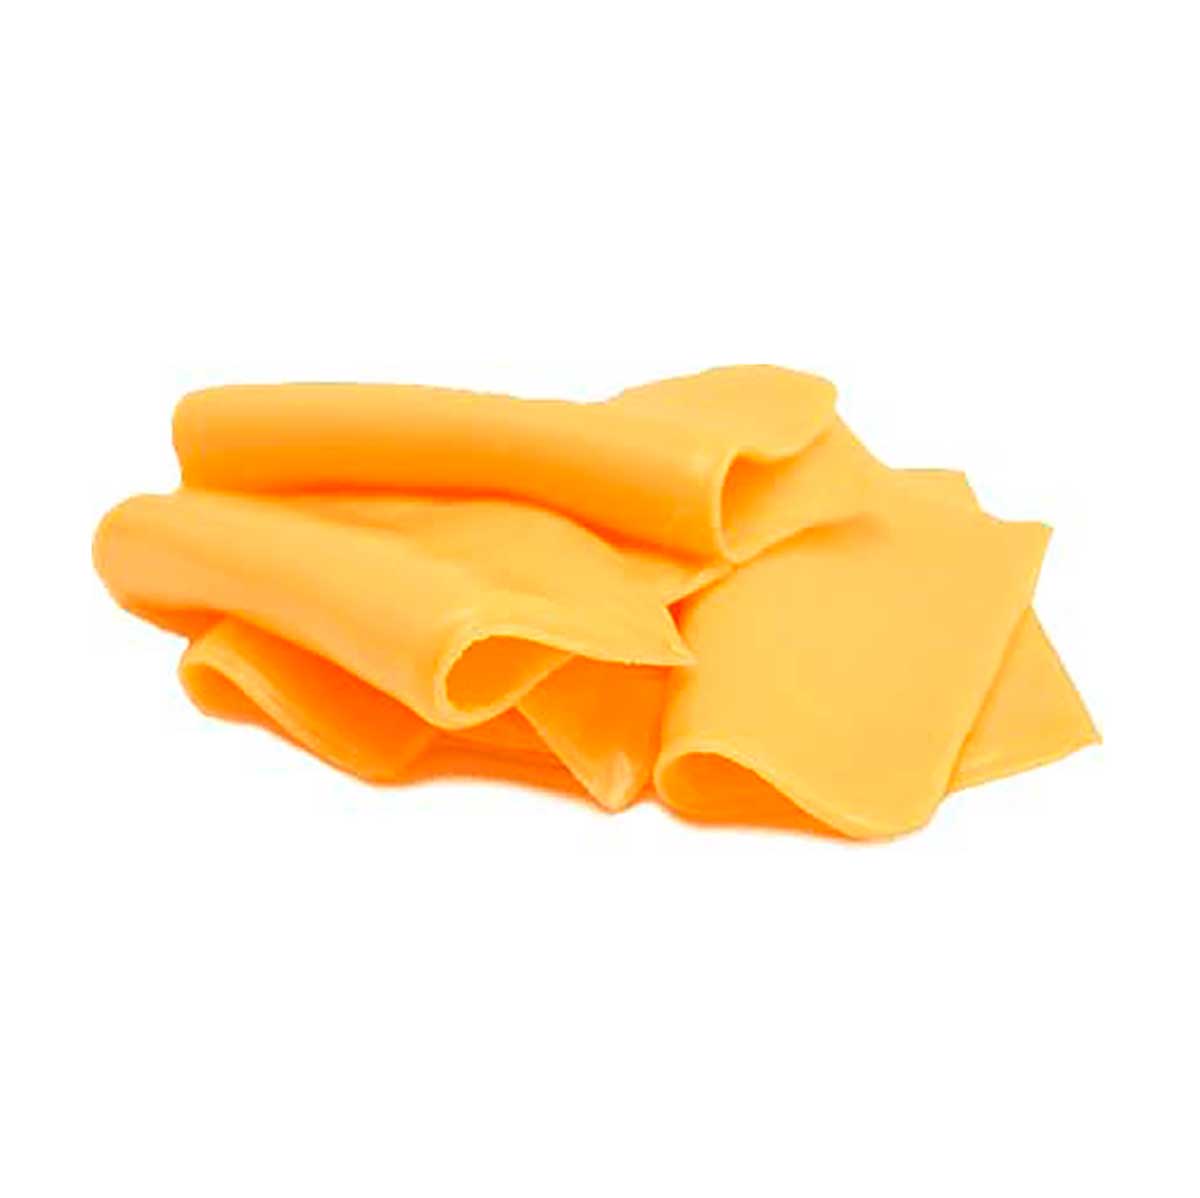 queijo-prato-import-fat-320g-1.jpg